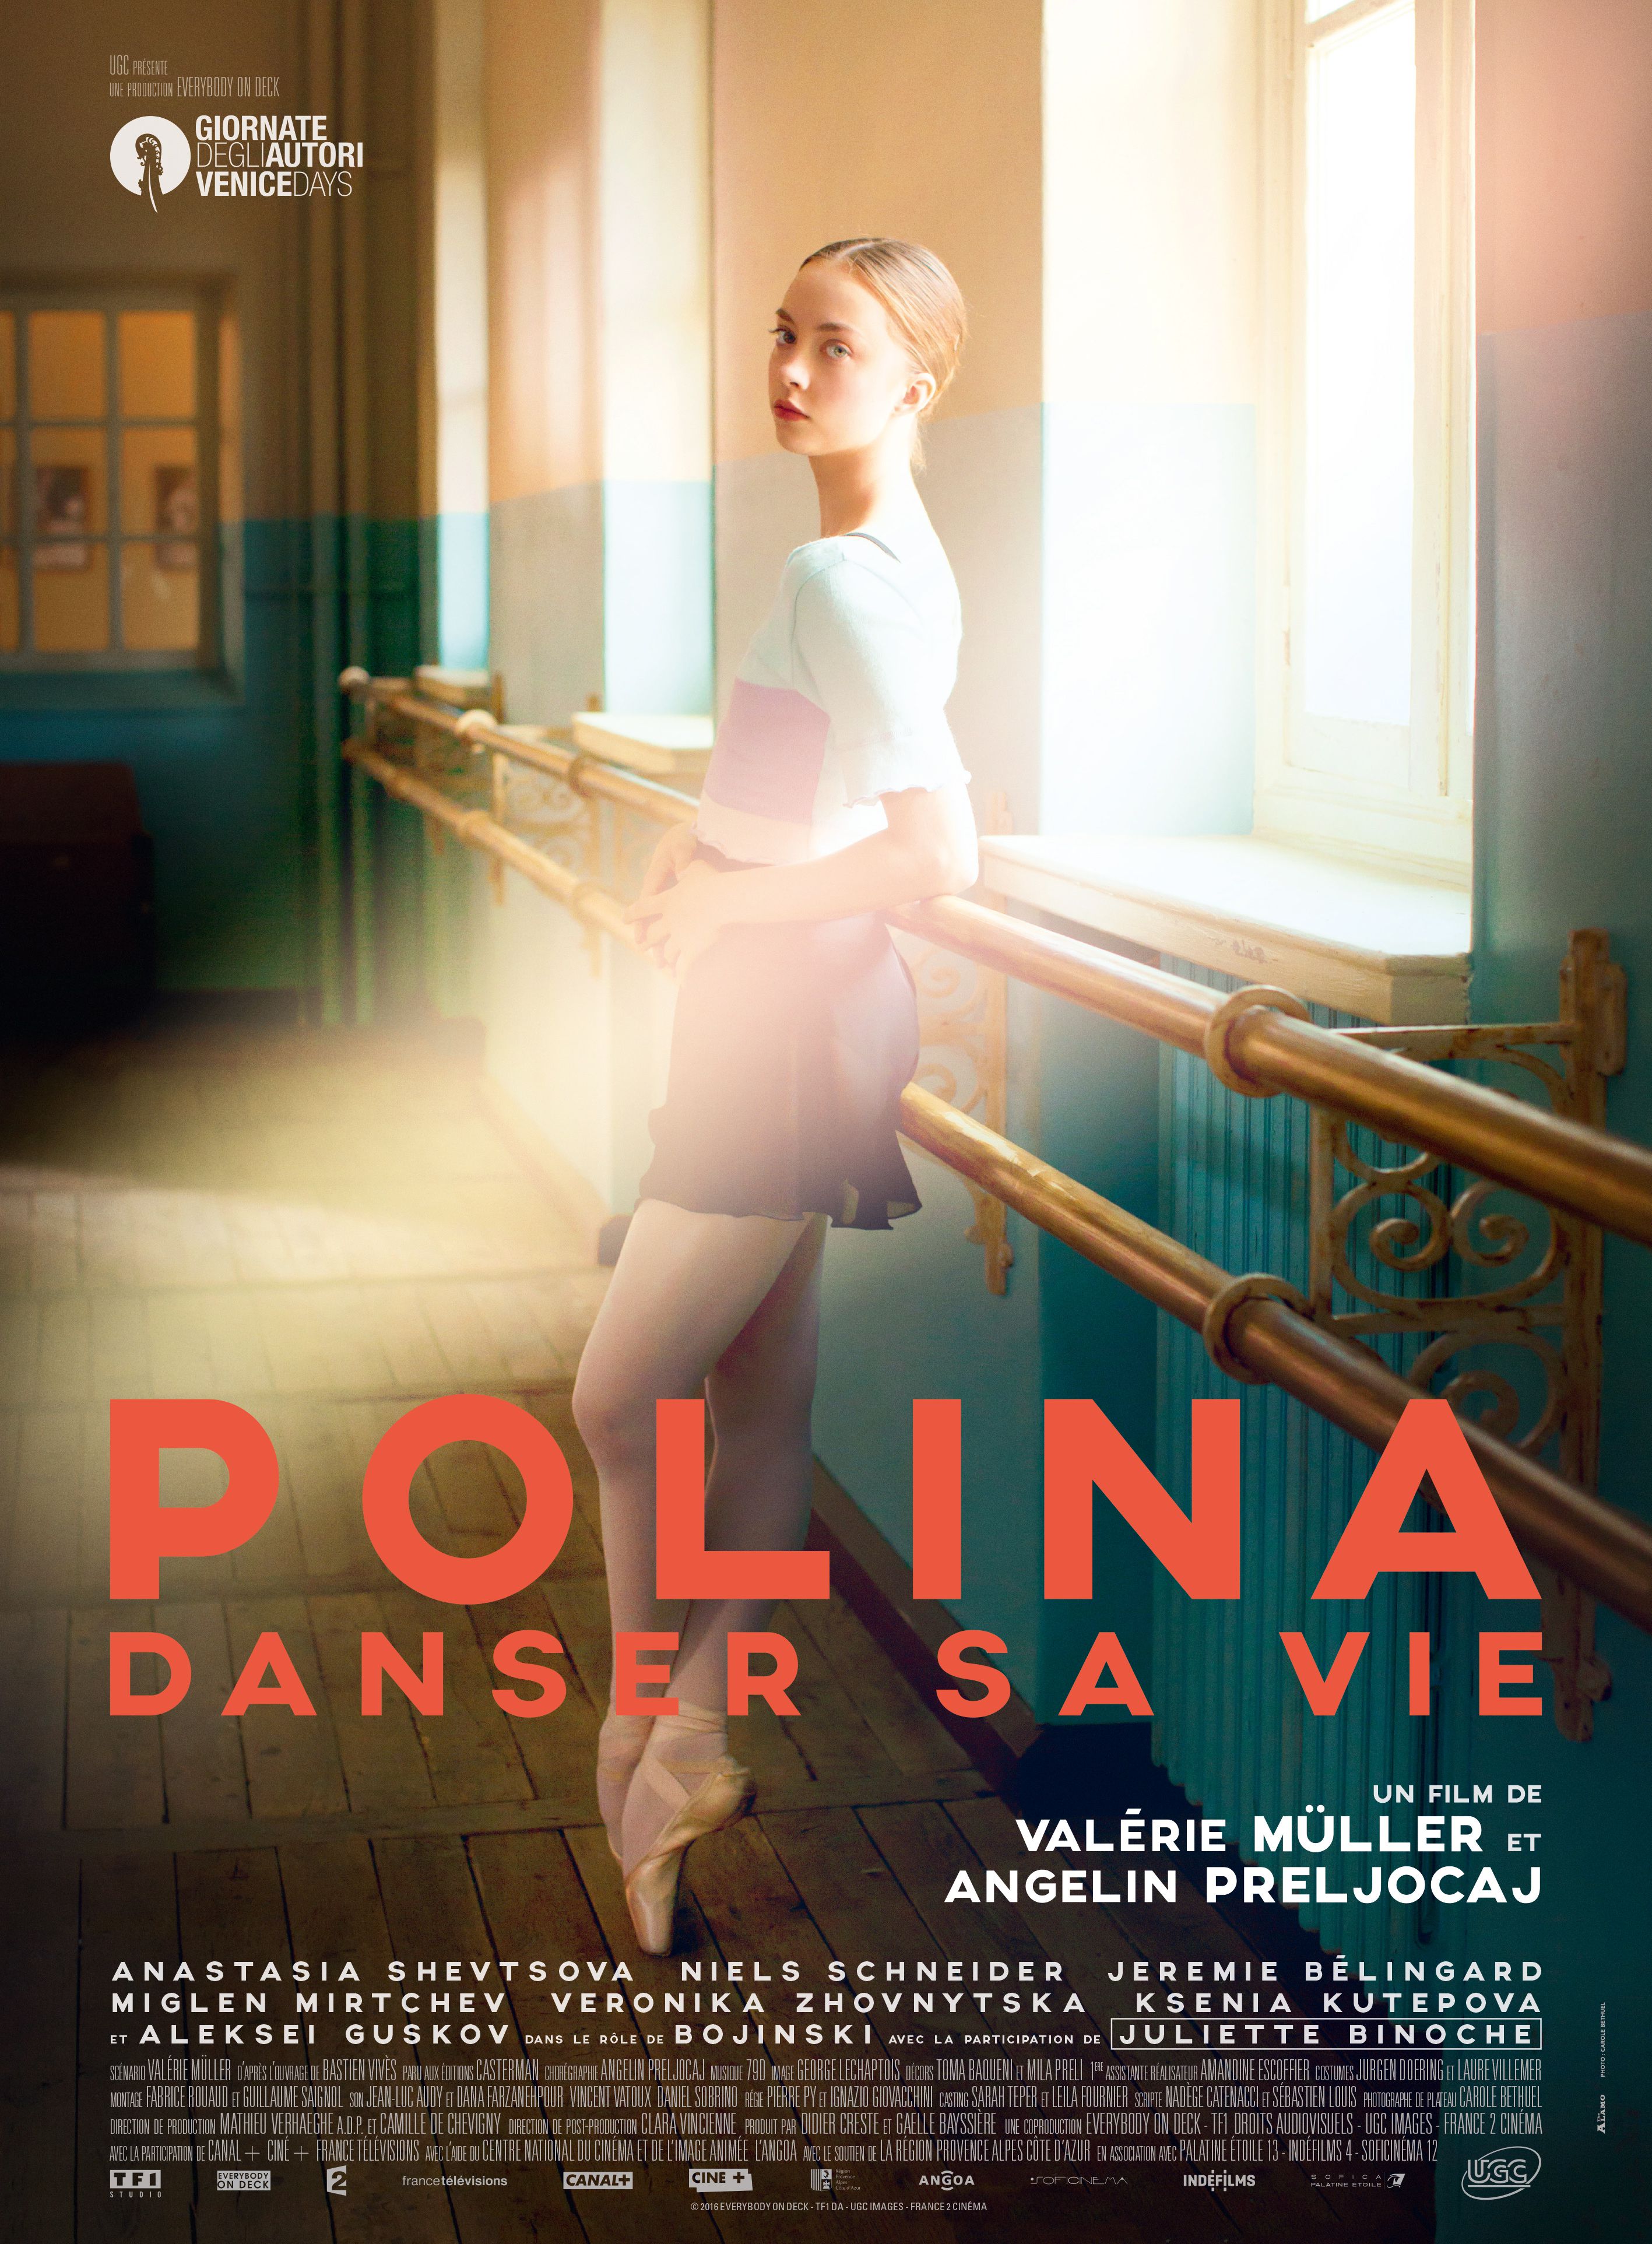 Polina, danser sa vie - Film (2016) streaming VF gratuit complet